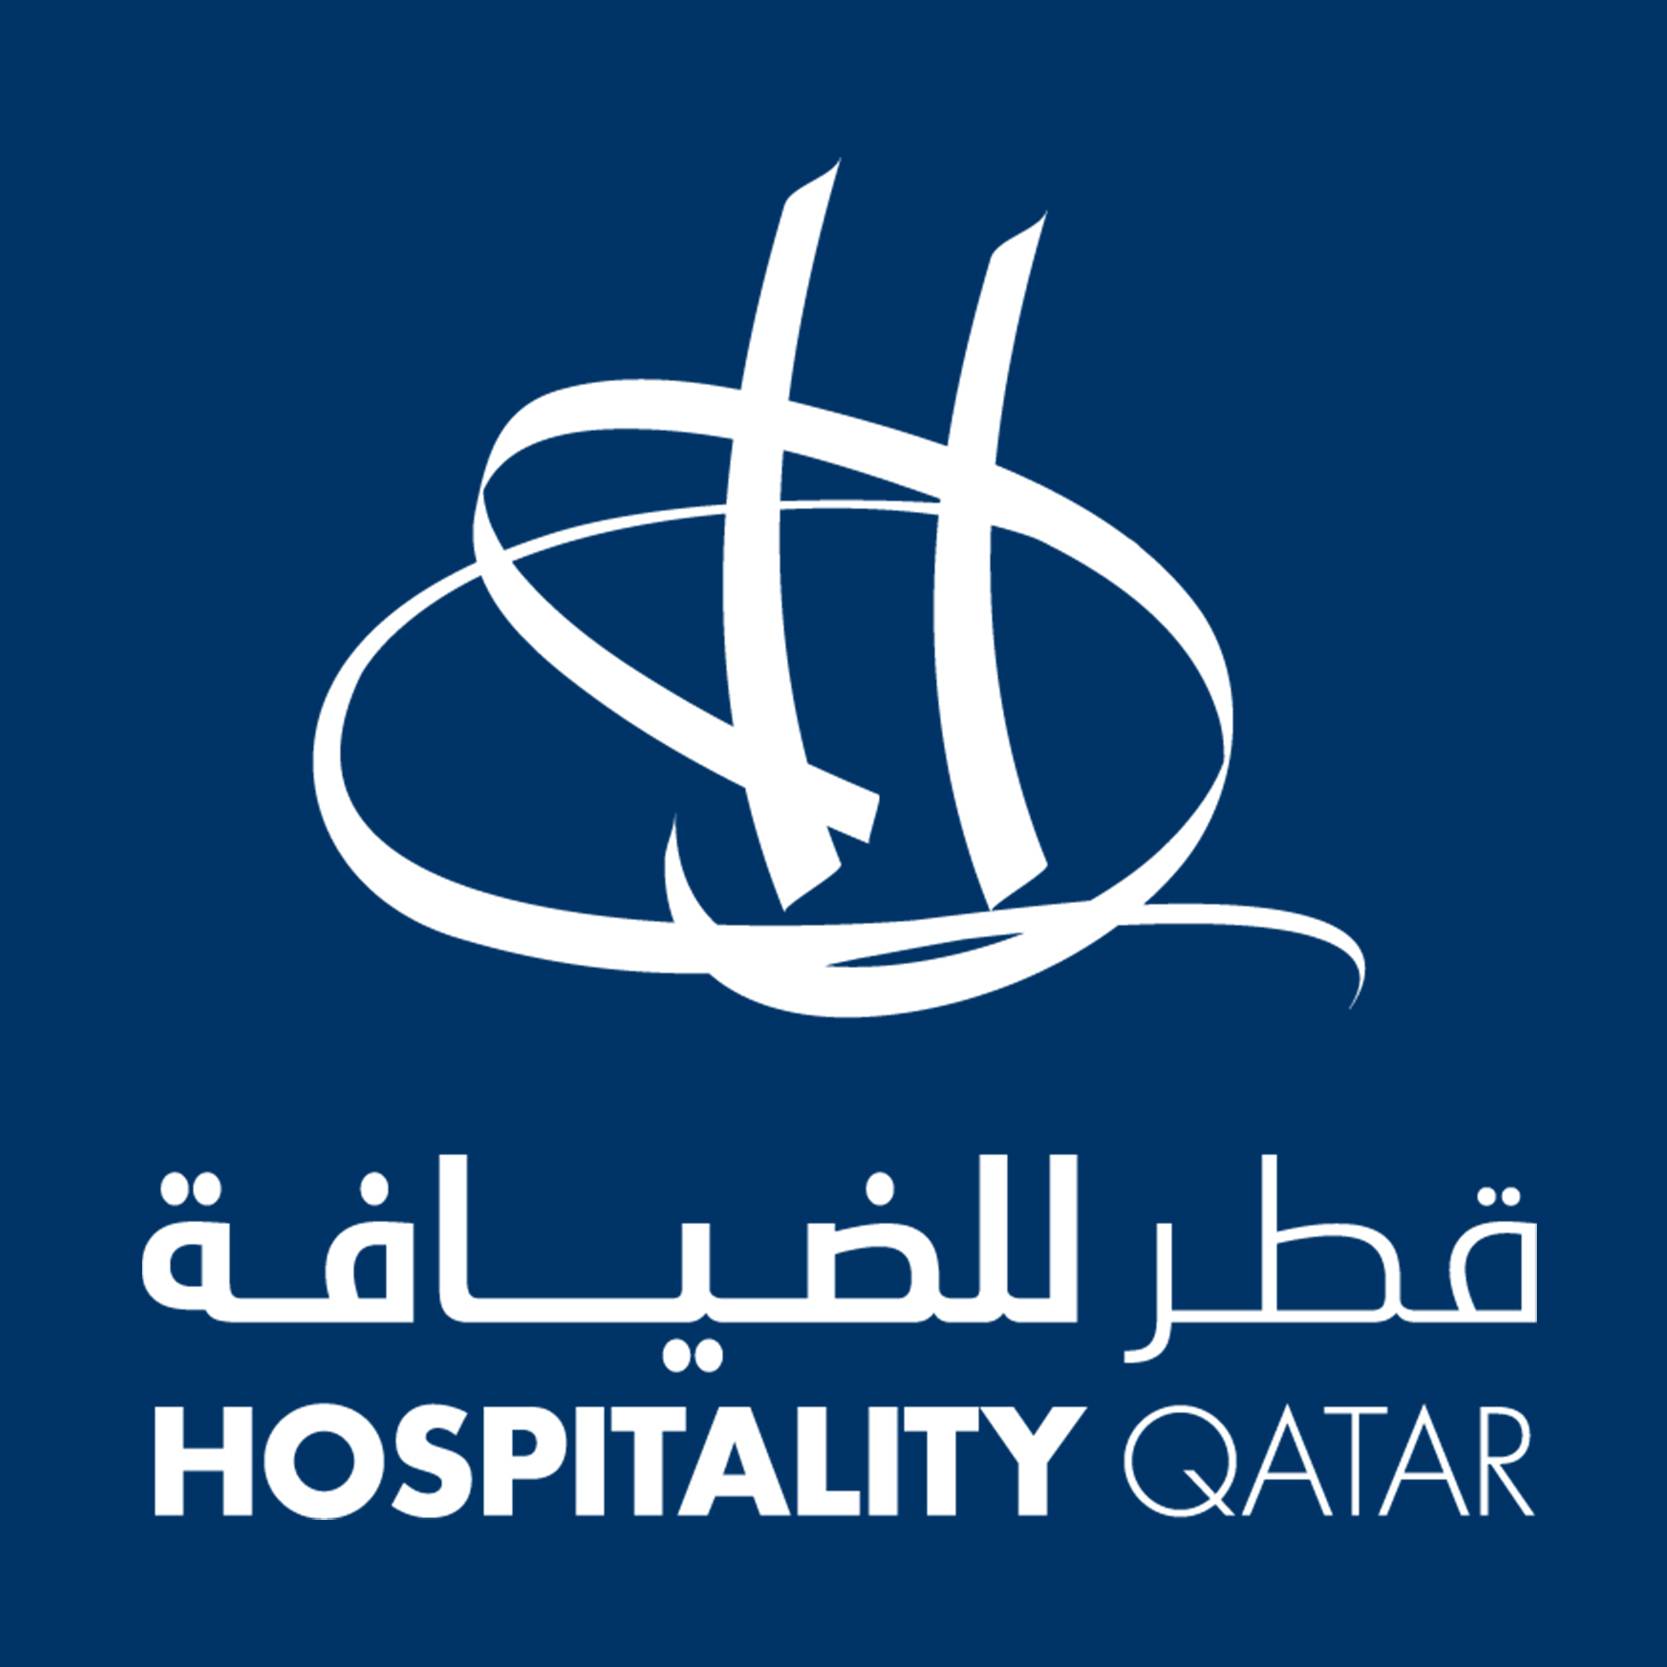 Hospitality Qatar